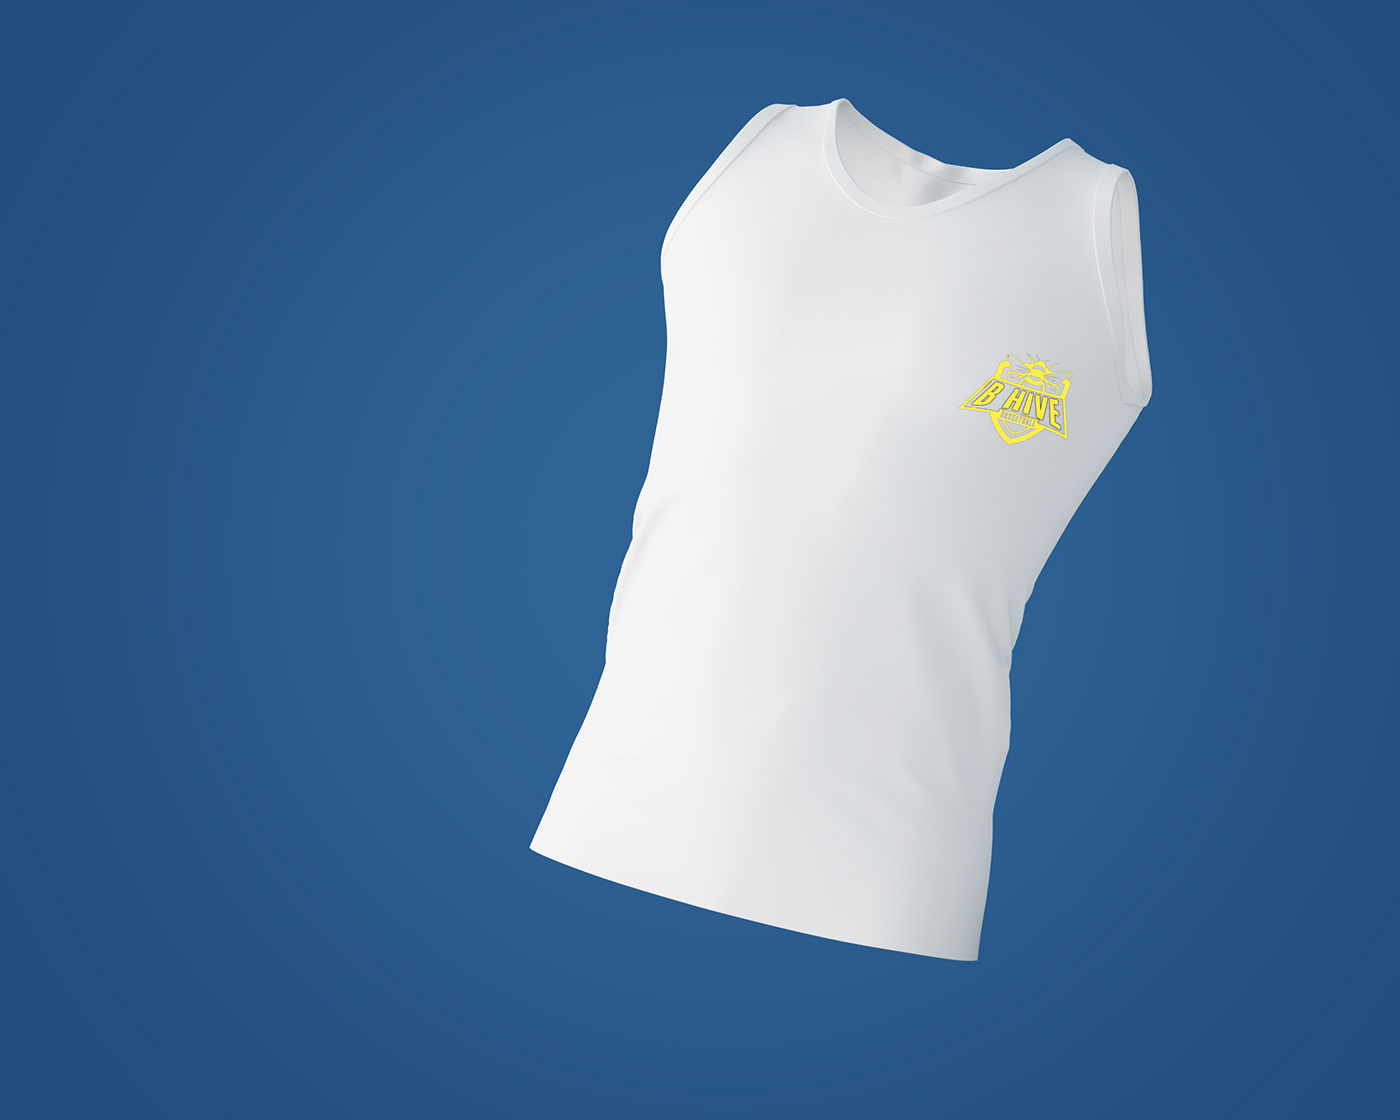 gym fabric model Clothing apparel merchandise tshirt vector